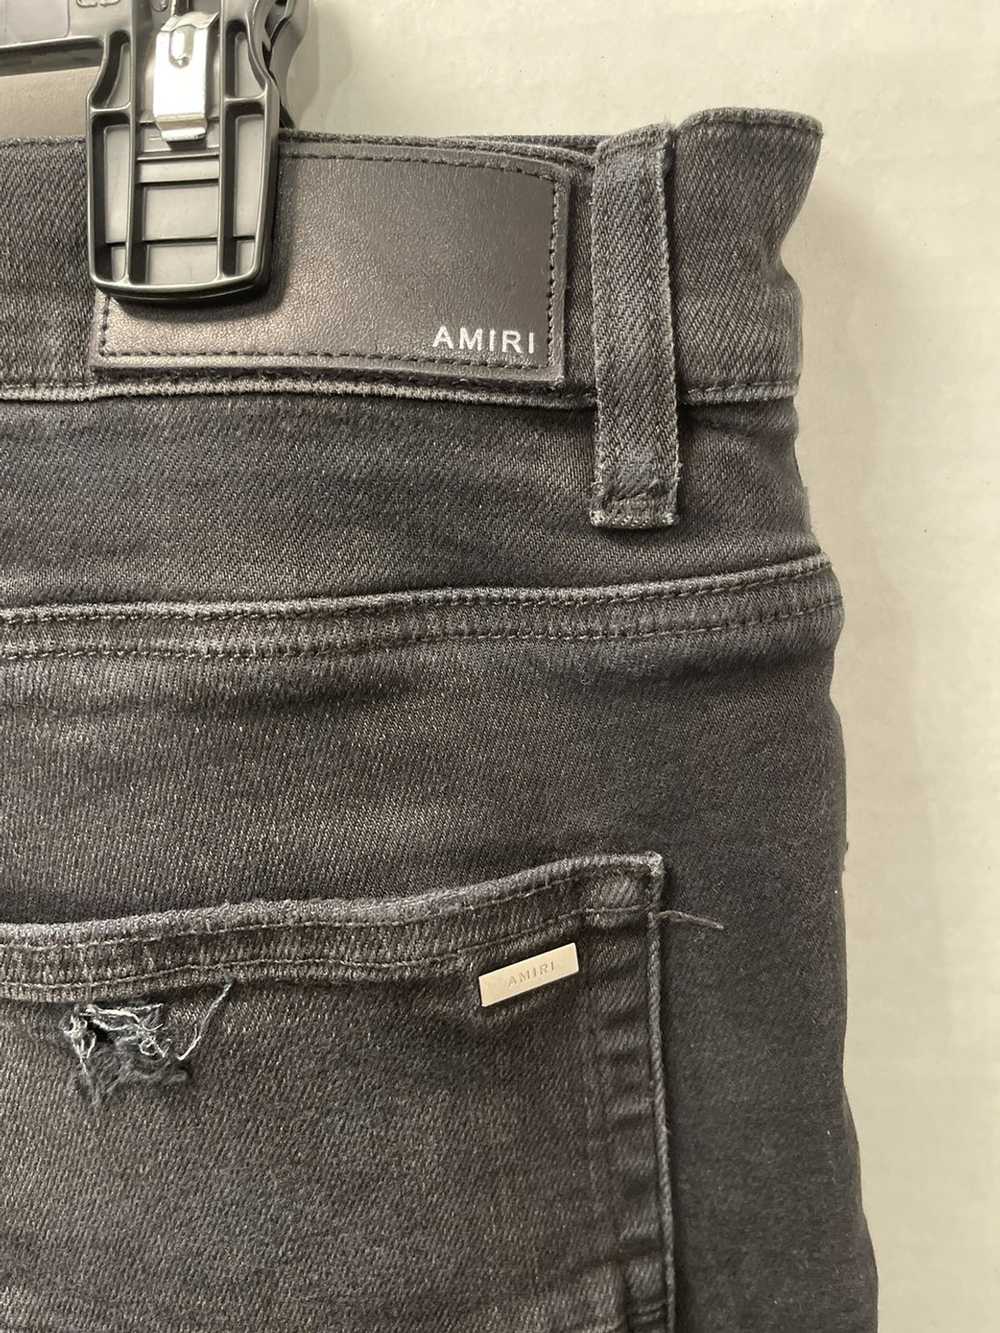 Amiri Mike Amiri Distressed Denim Jeans Size 34 - image 6